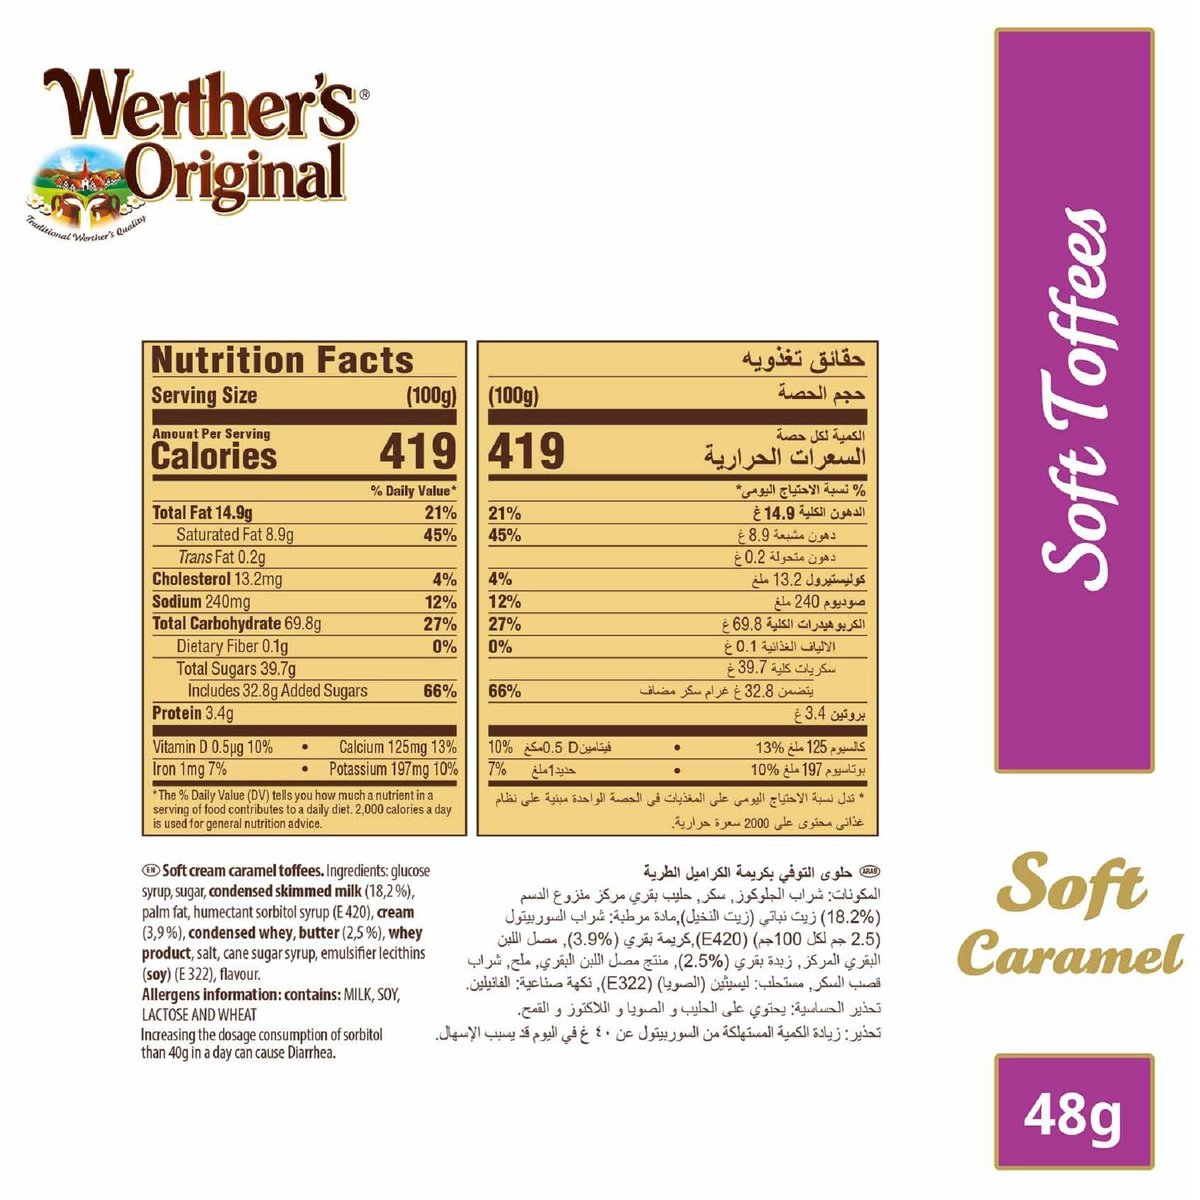 Storck Werther's Original Soft Caramel Toffees 48 g